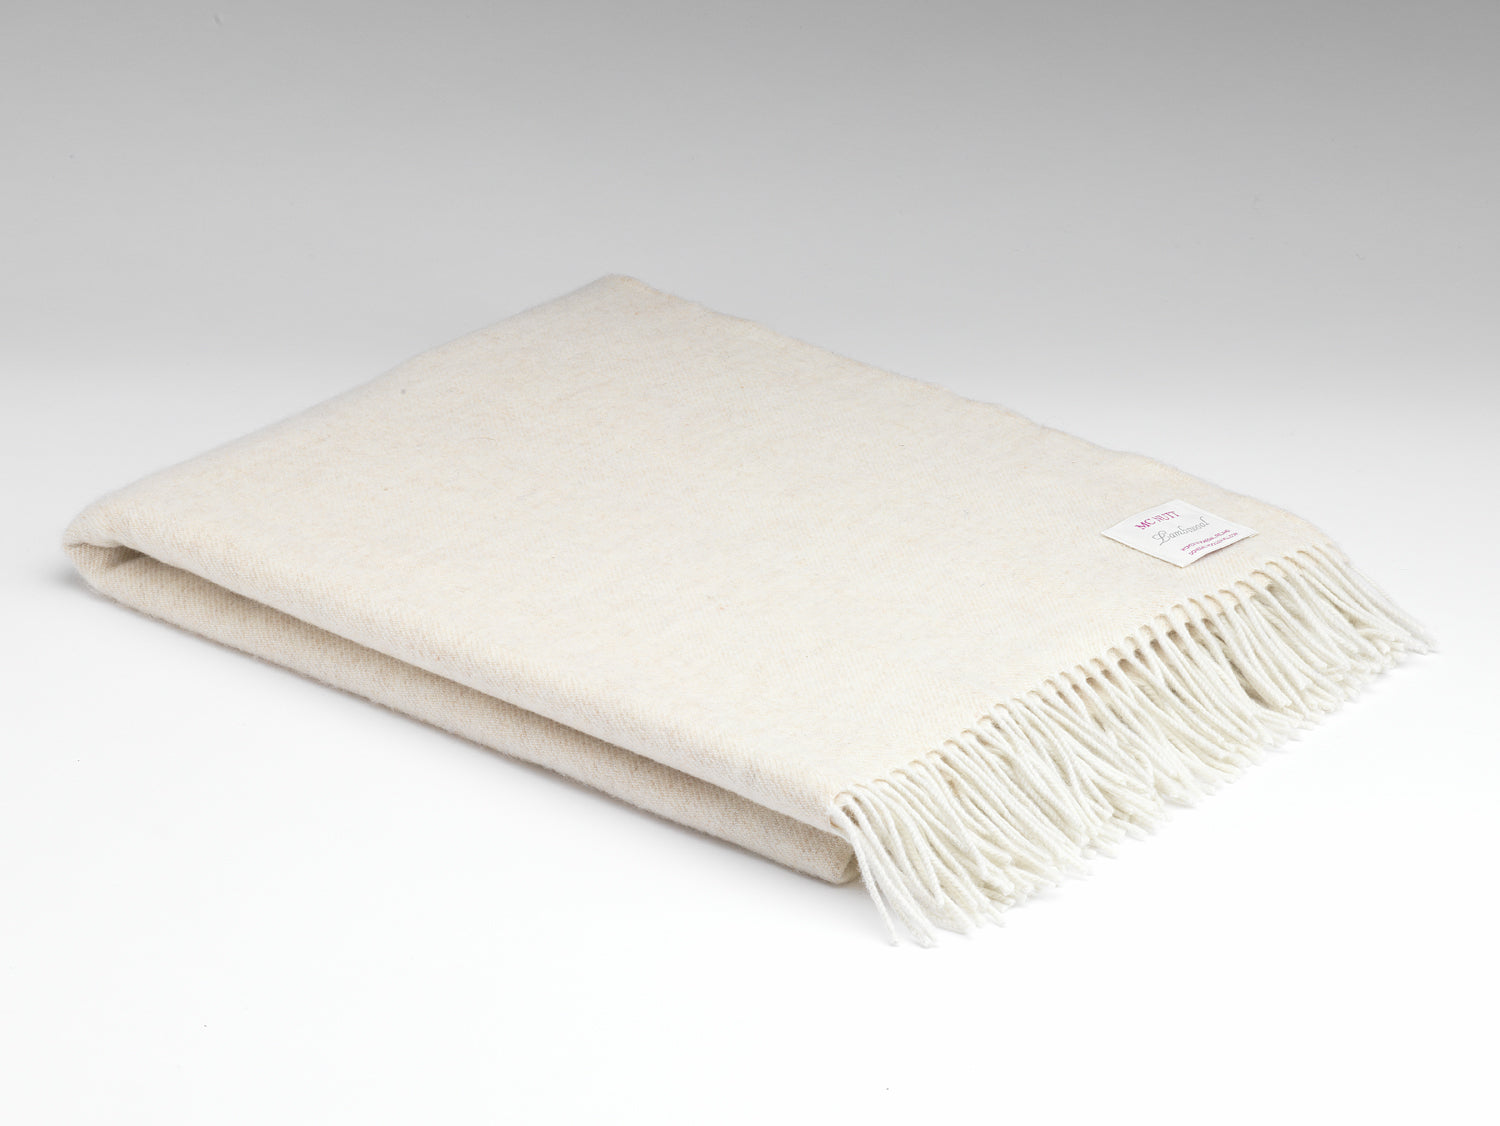 Merino wool blanket, warm white. Made in Ireland. 